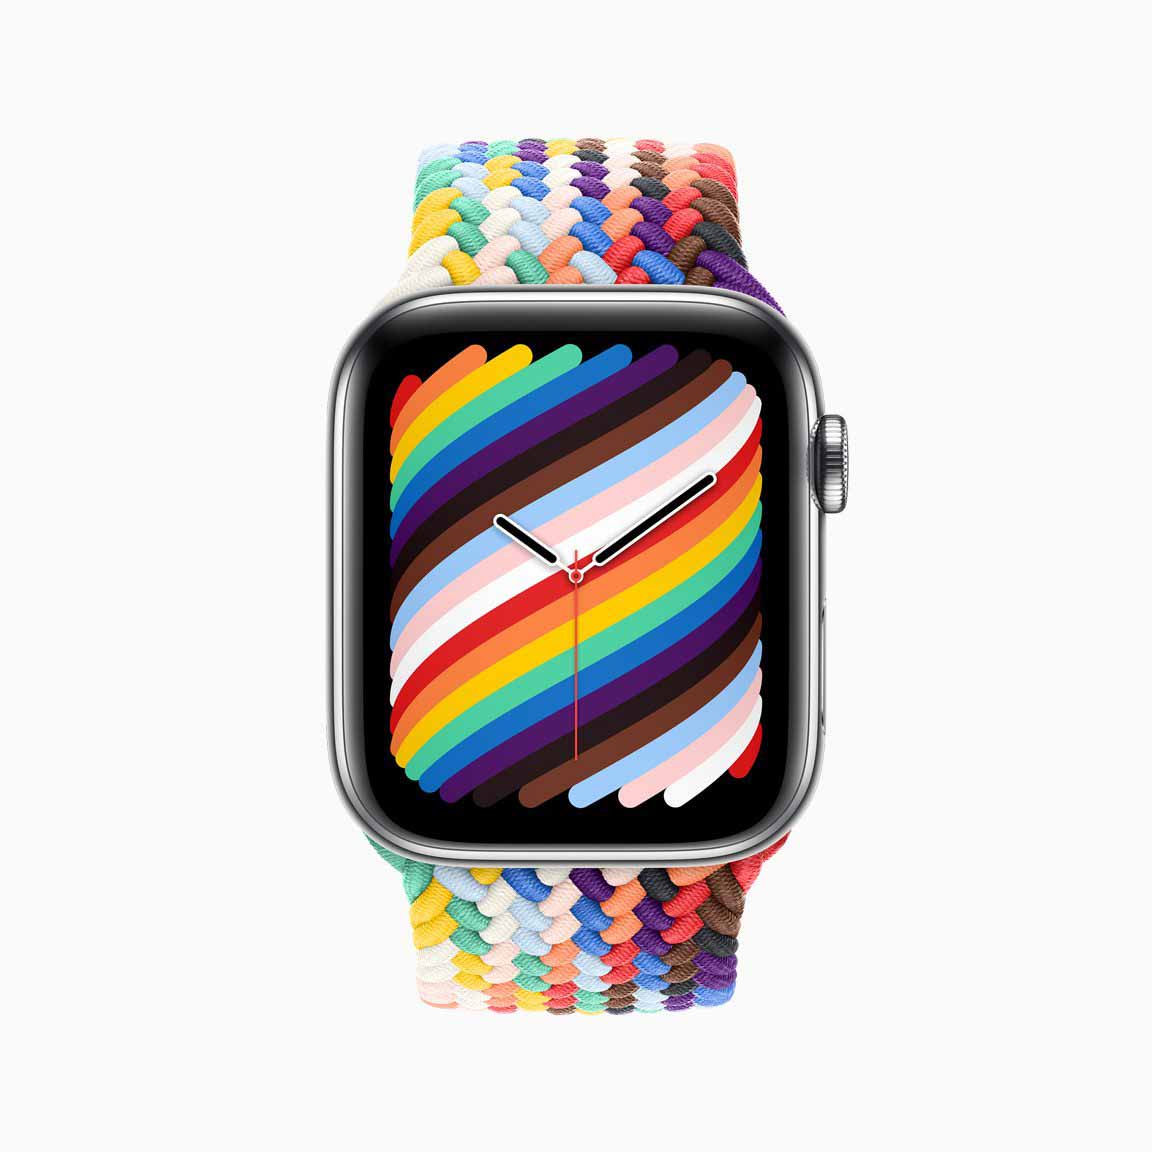 Apple представляет два новых ремешка и циферблат Apple Watch Pride